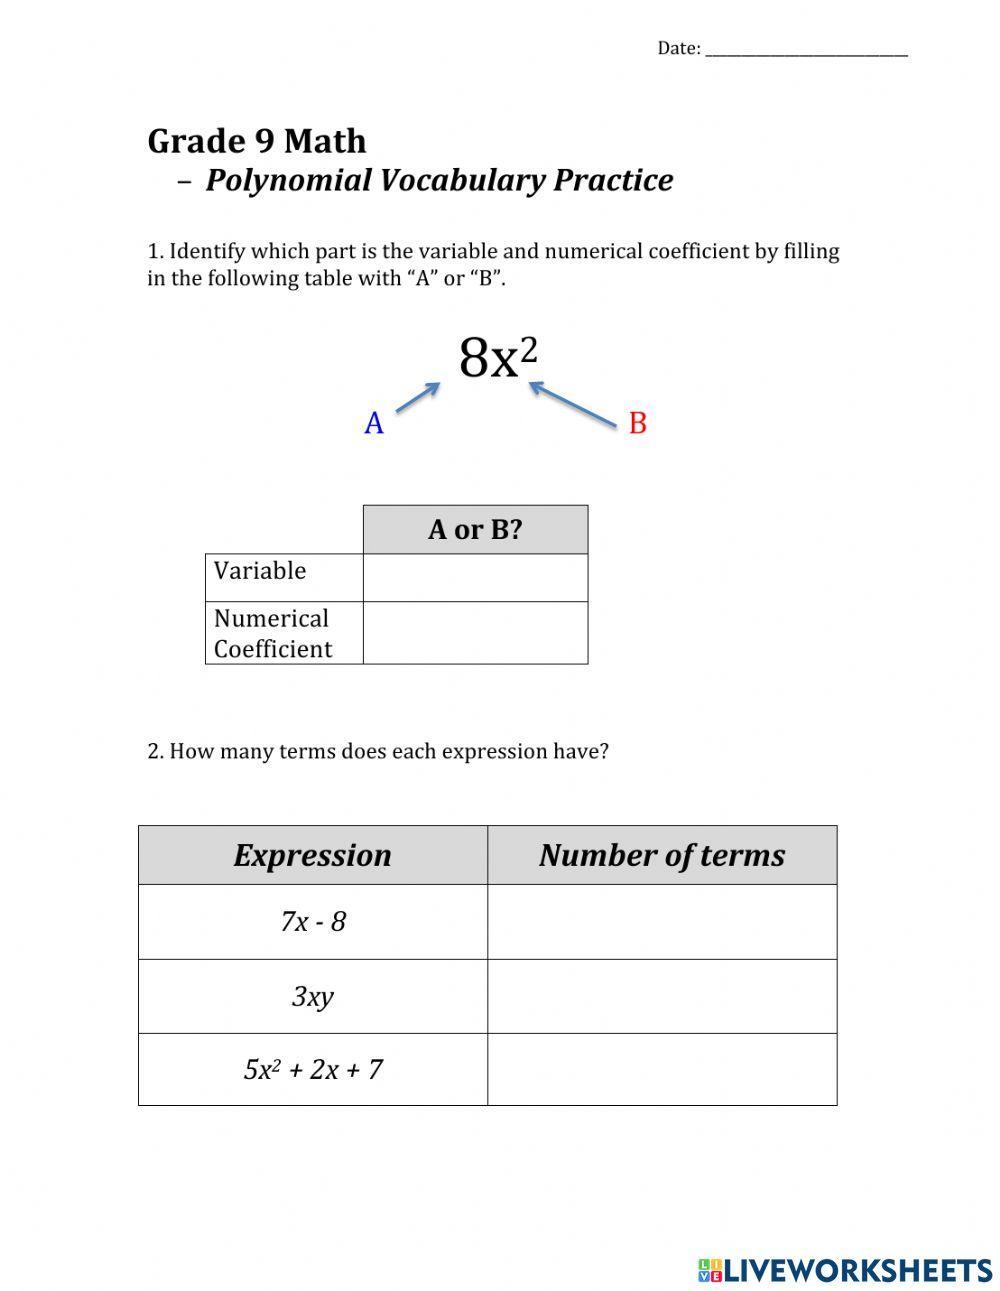 Grade 9 Polynomial Vocabulary Practice